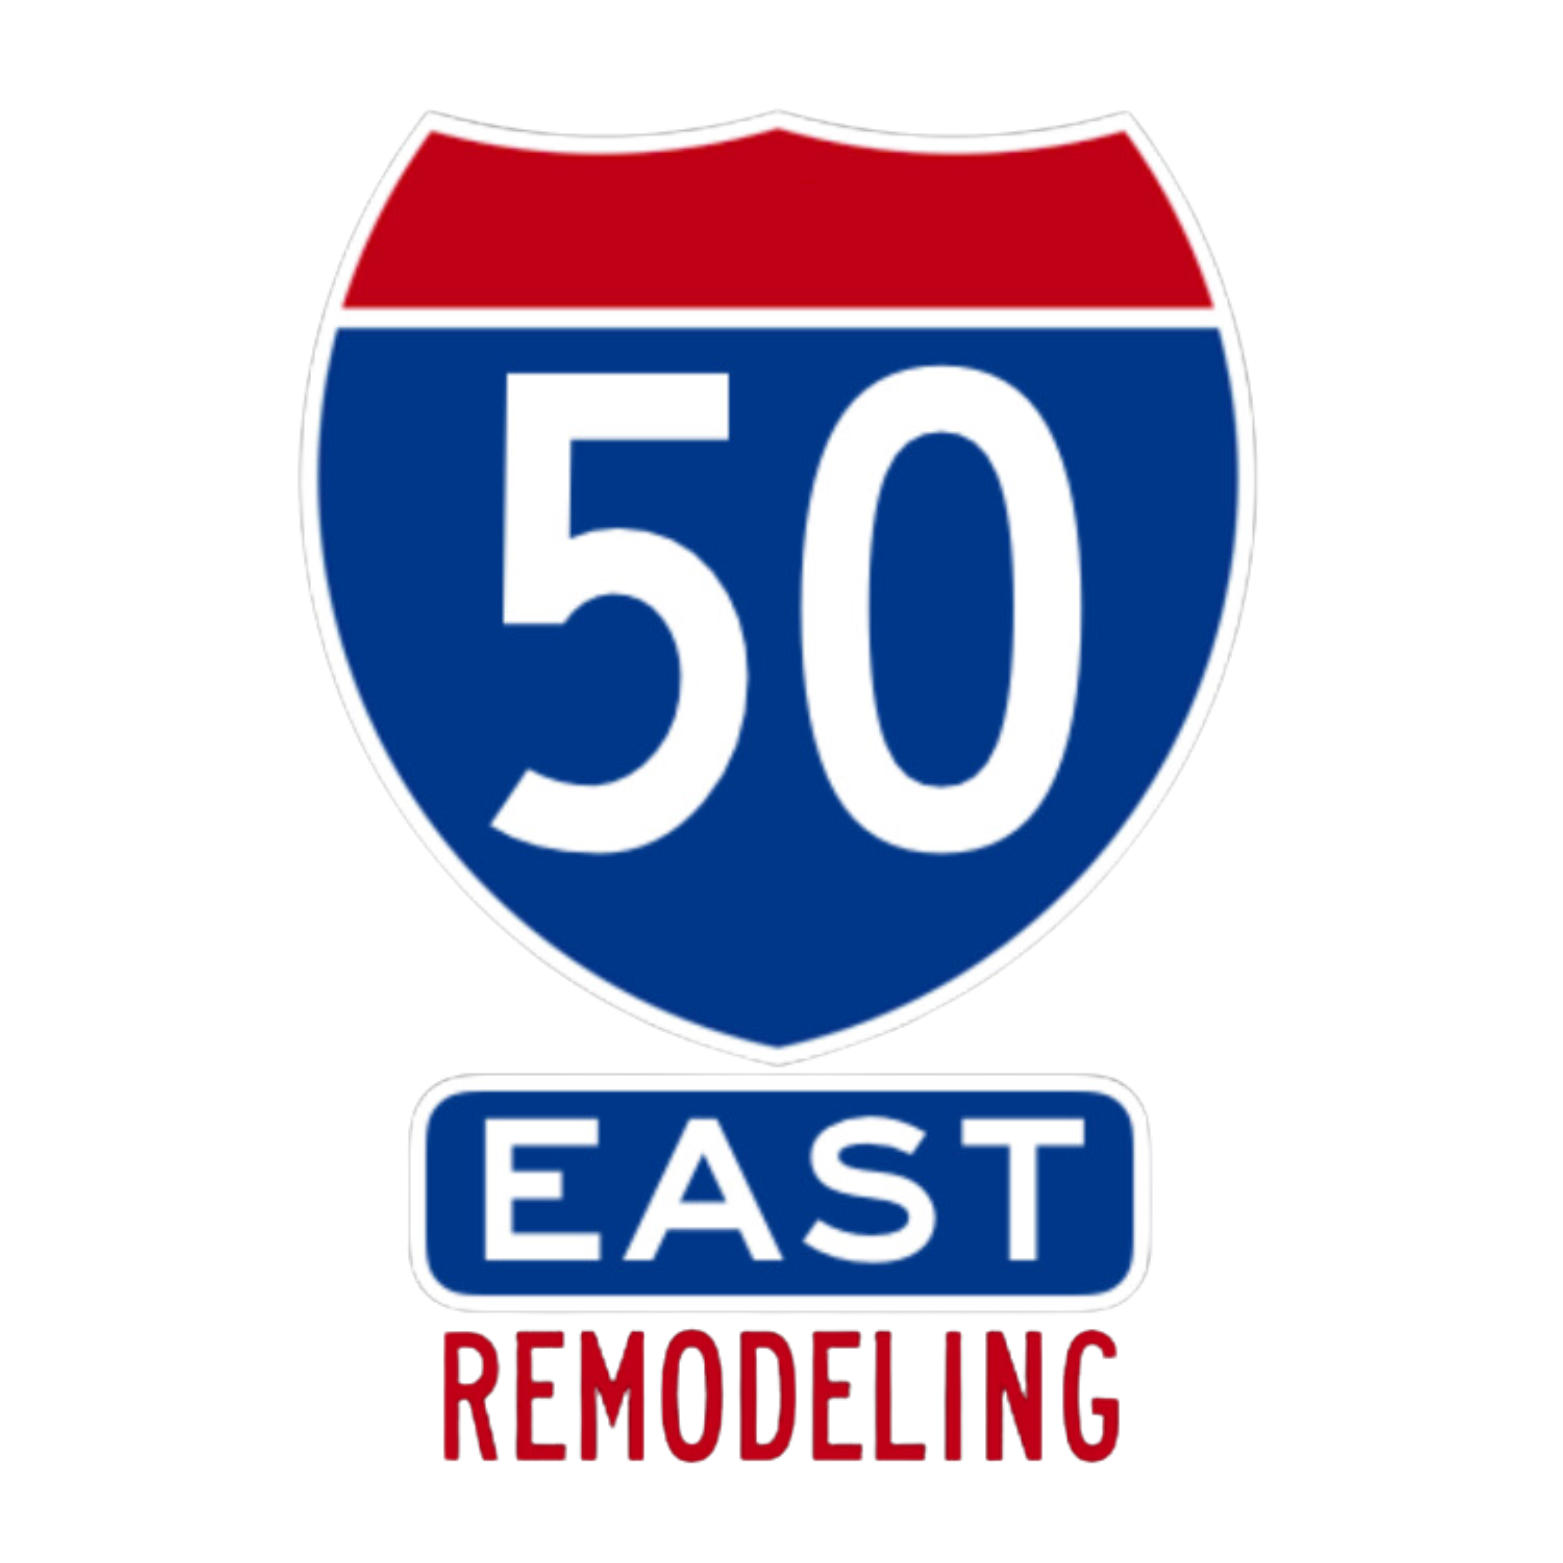 50 East Remodeling